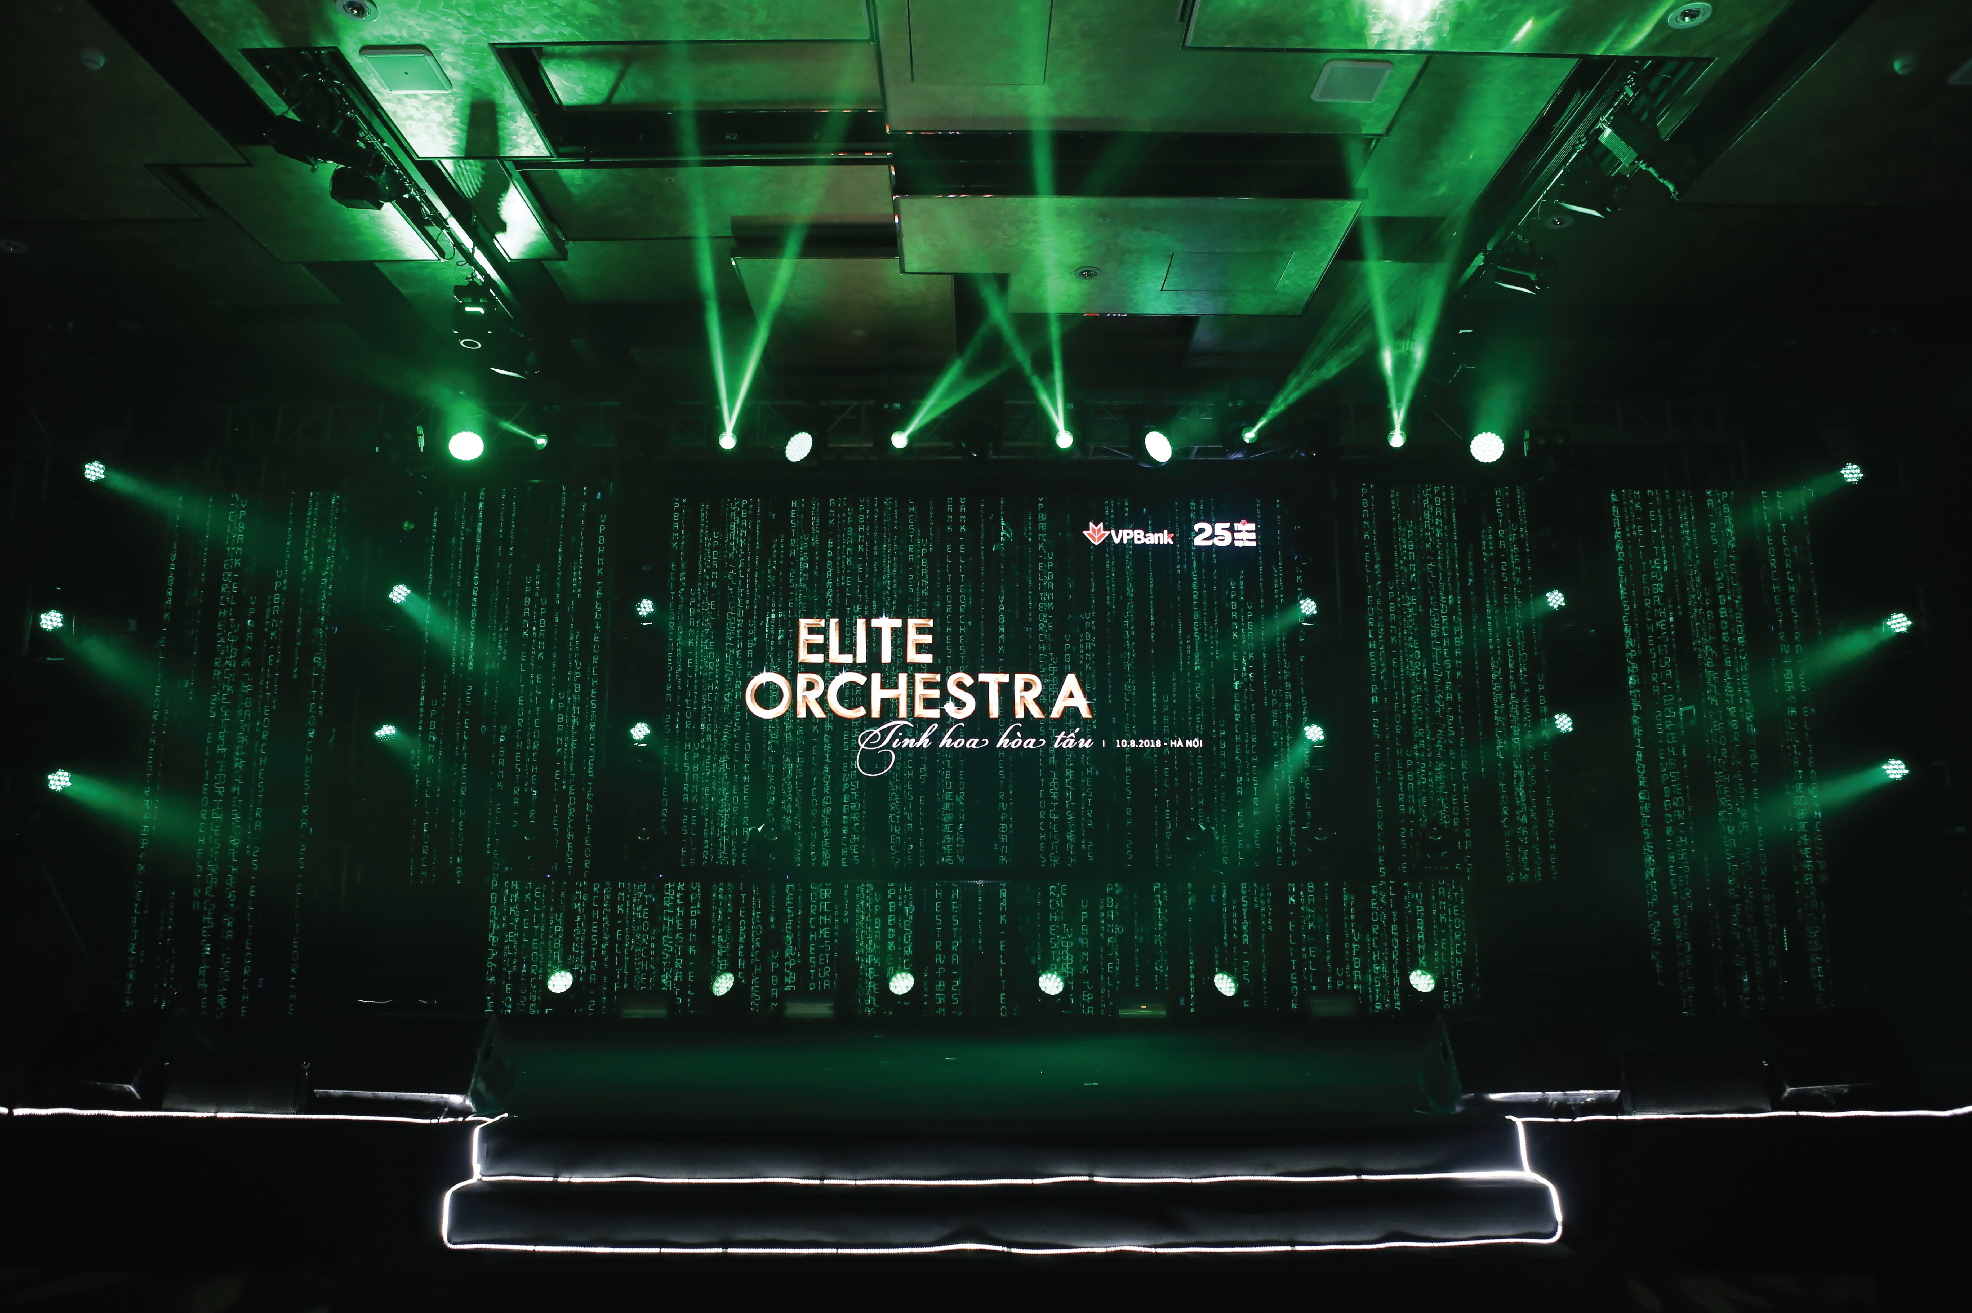 3.1 VPBank Elite Orchestra 07